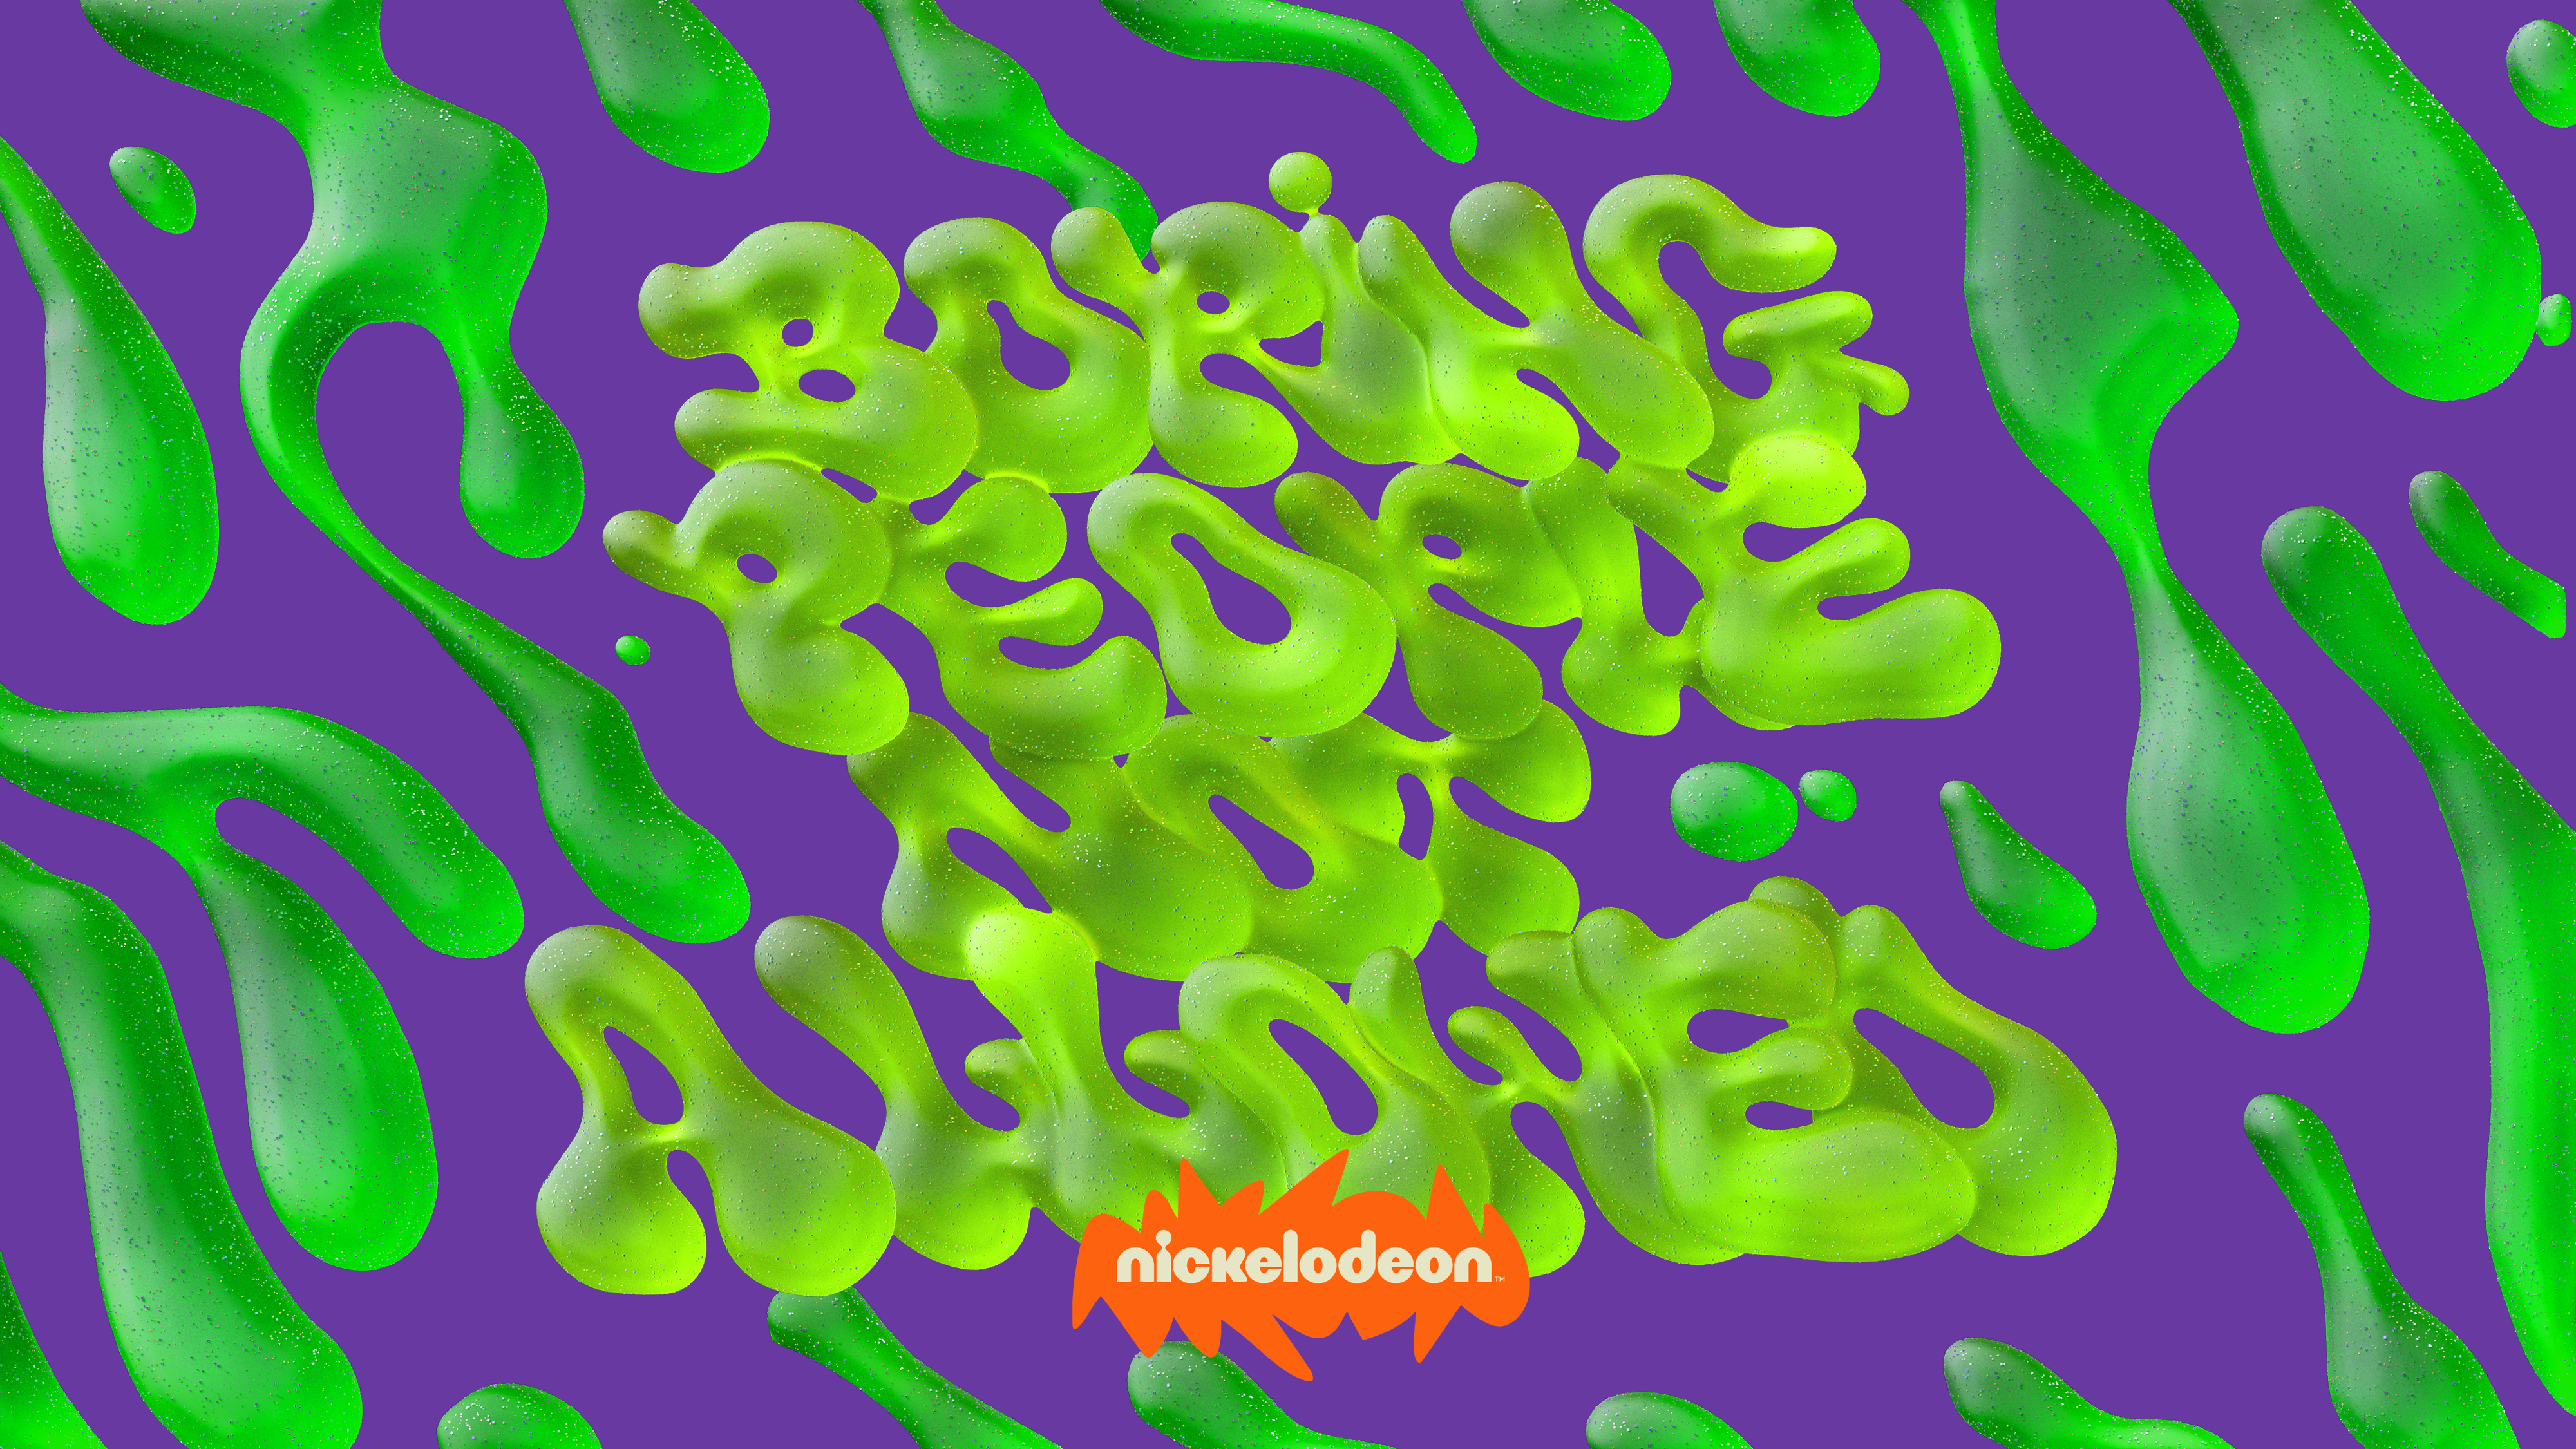 Nickelodeon-boring-lettering